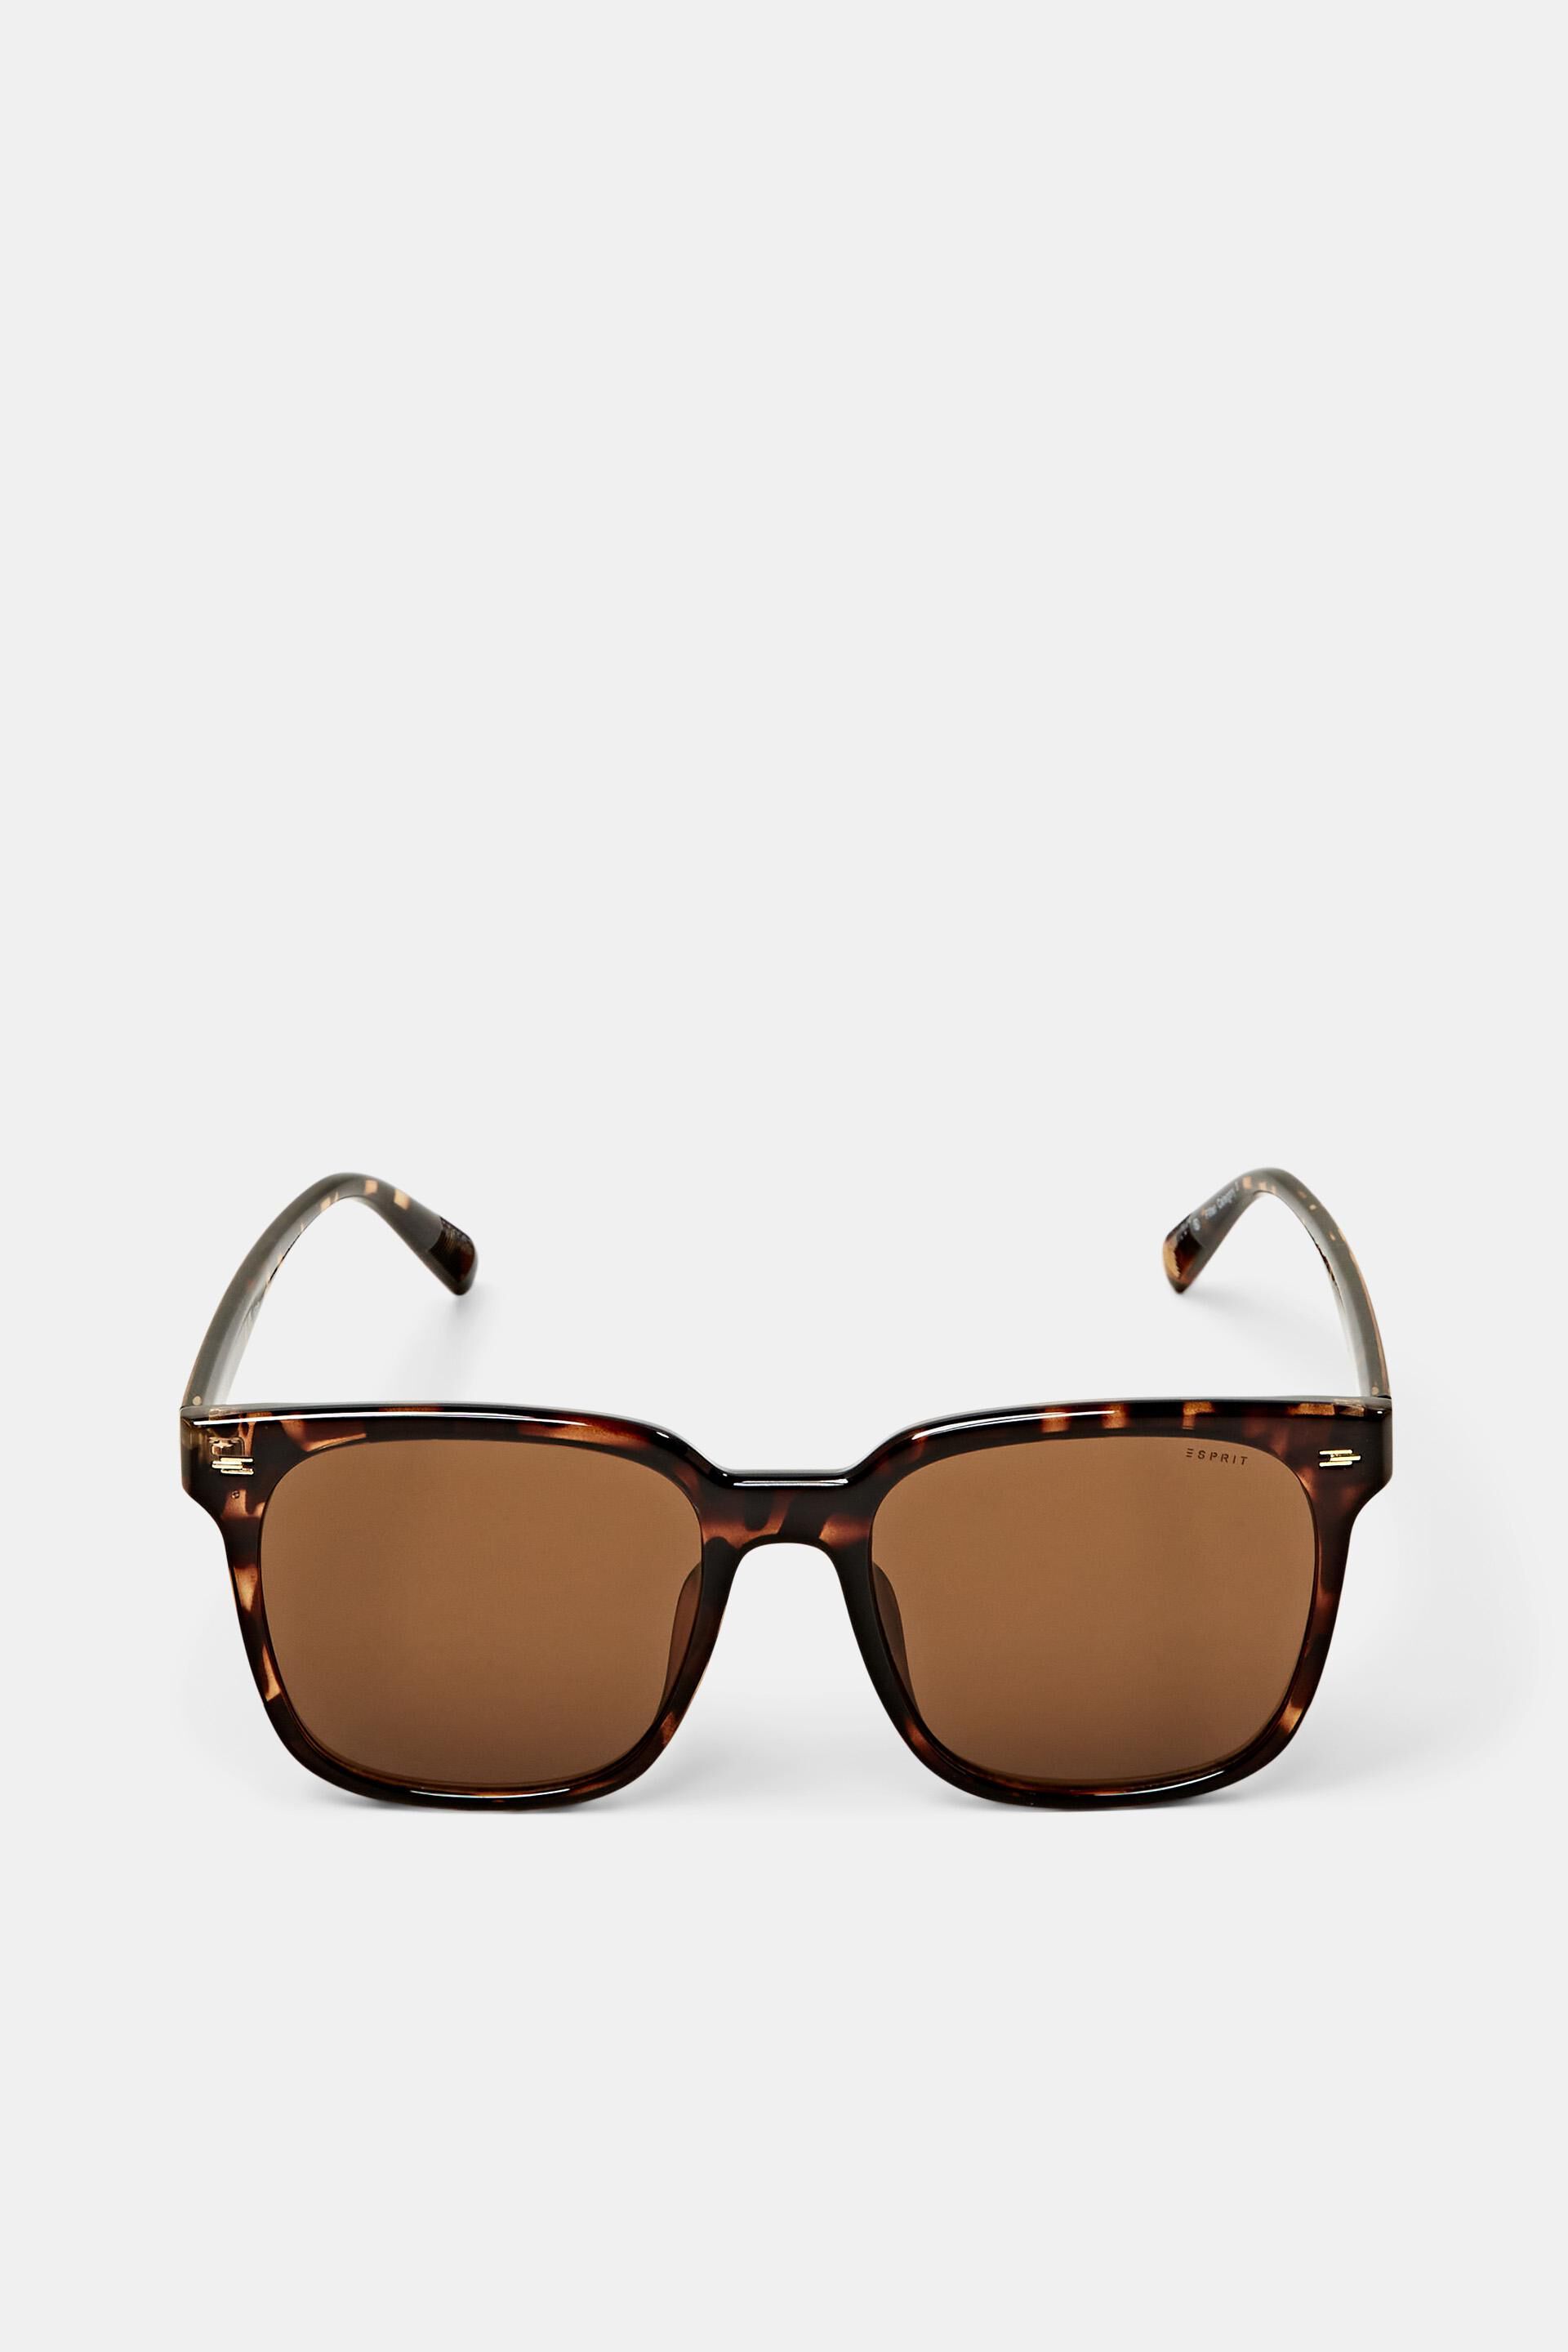 Esprit sunglasses acetate Lightweight